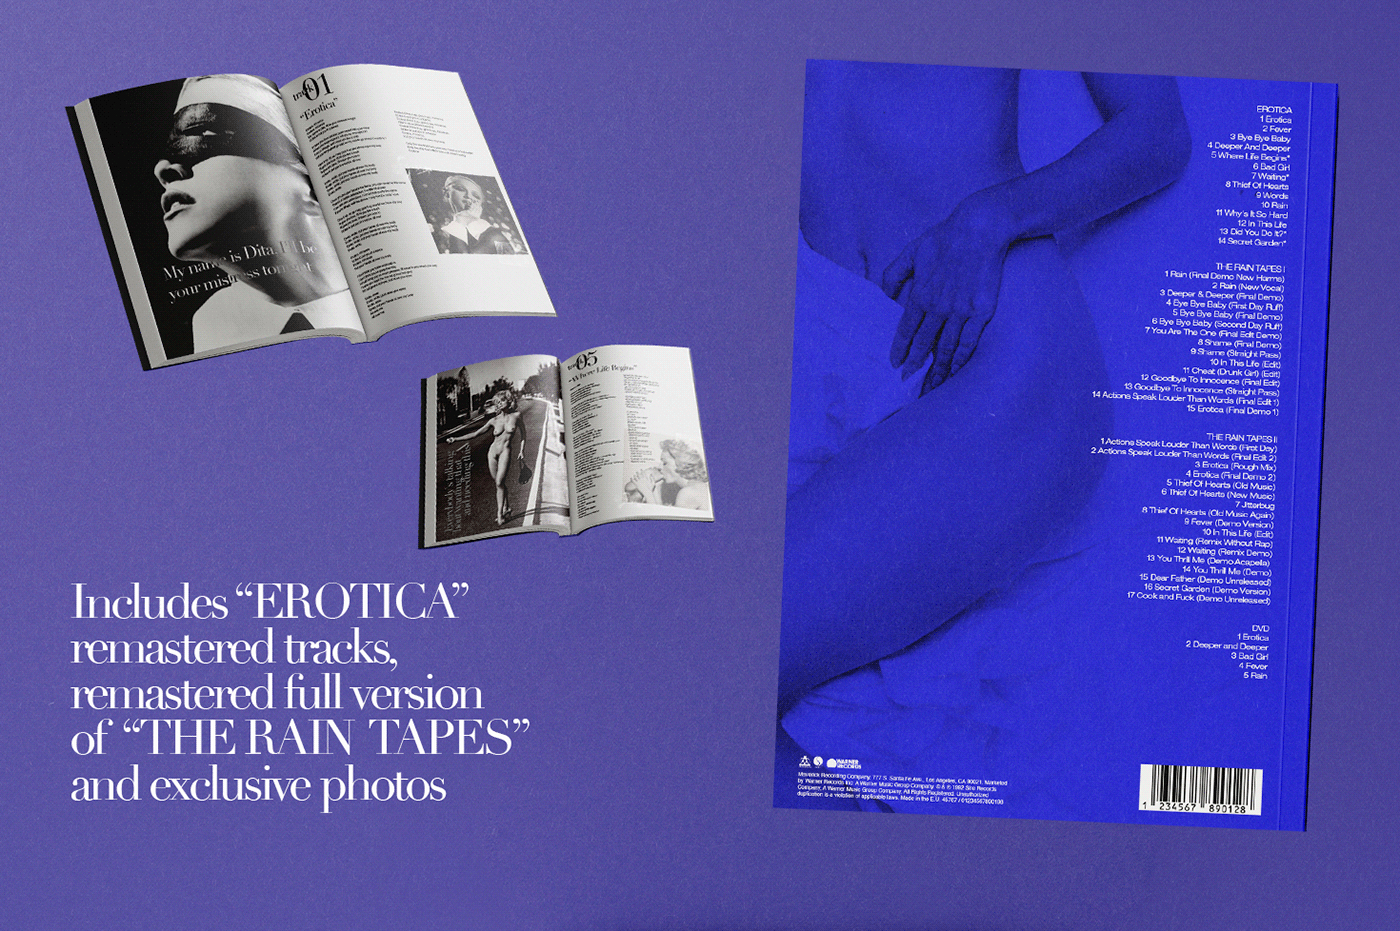 artist artwork book cassette cd erotica madonna music phone vinyl